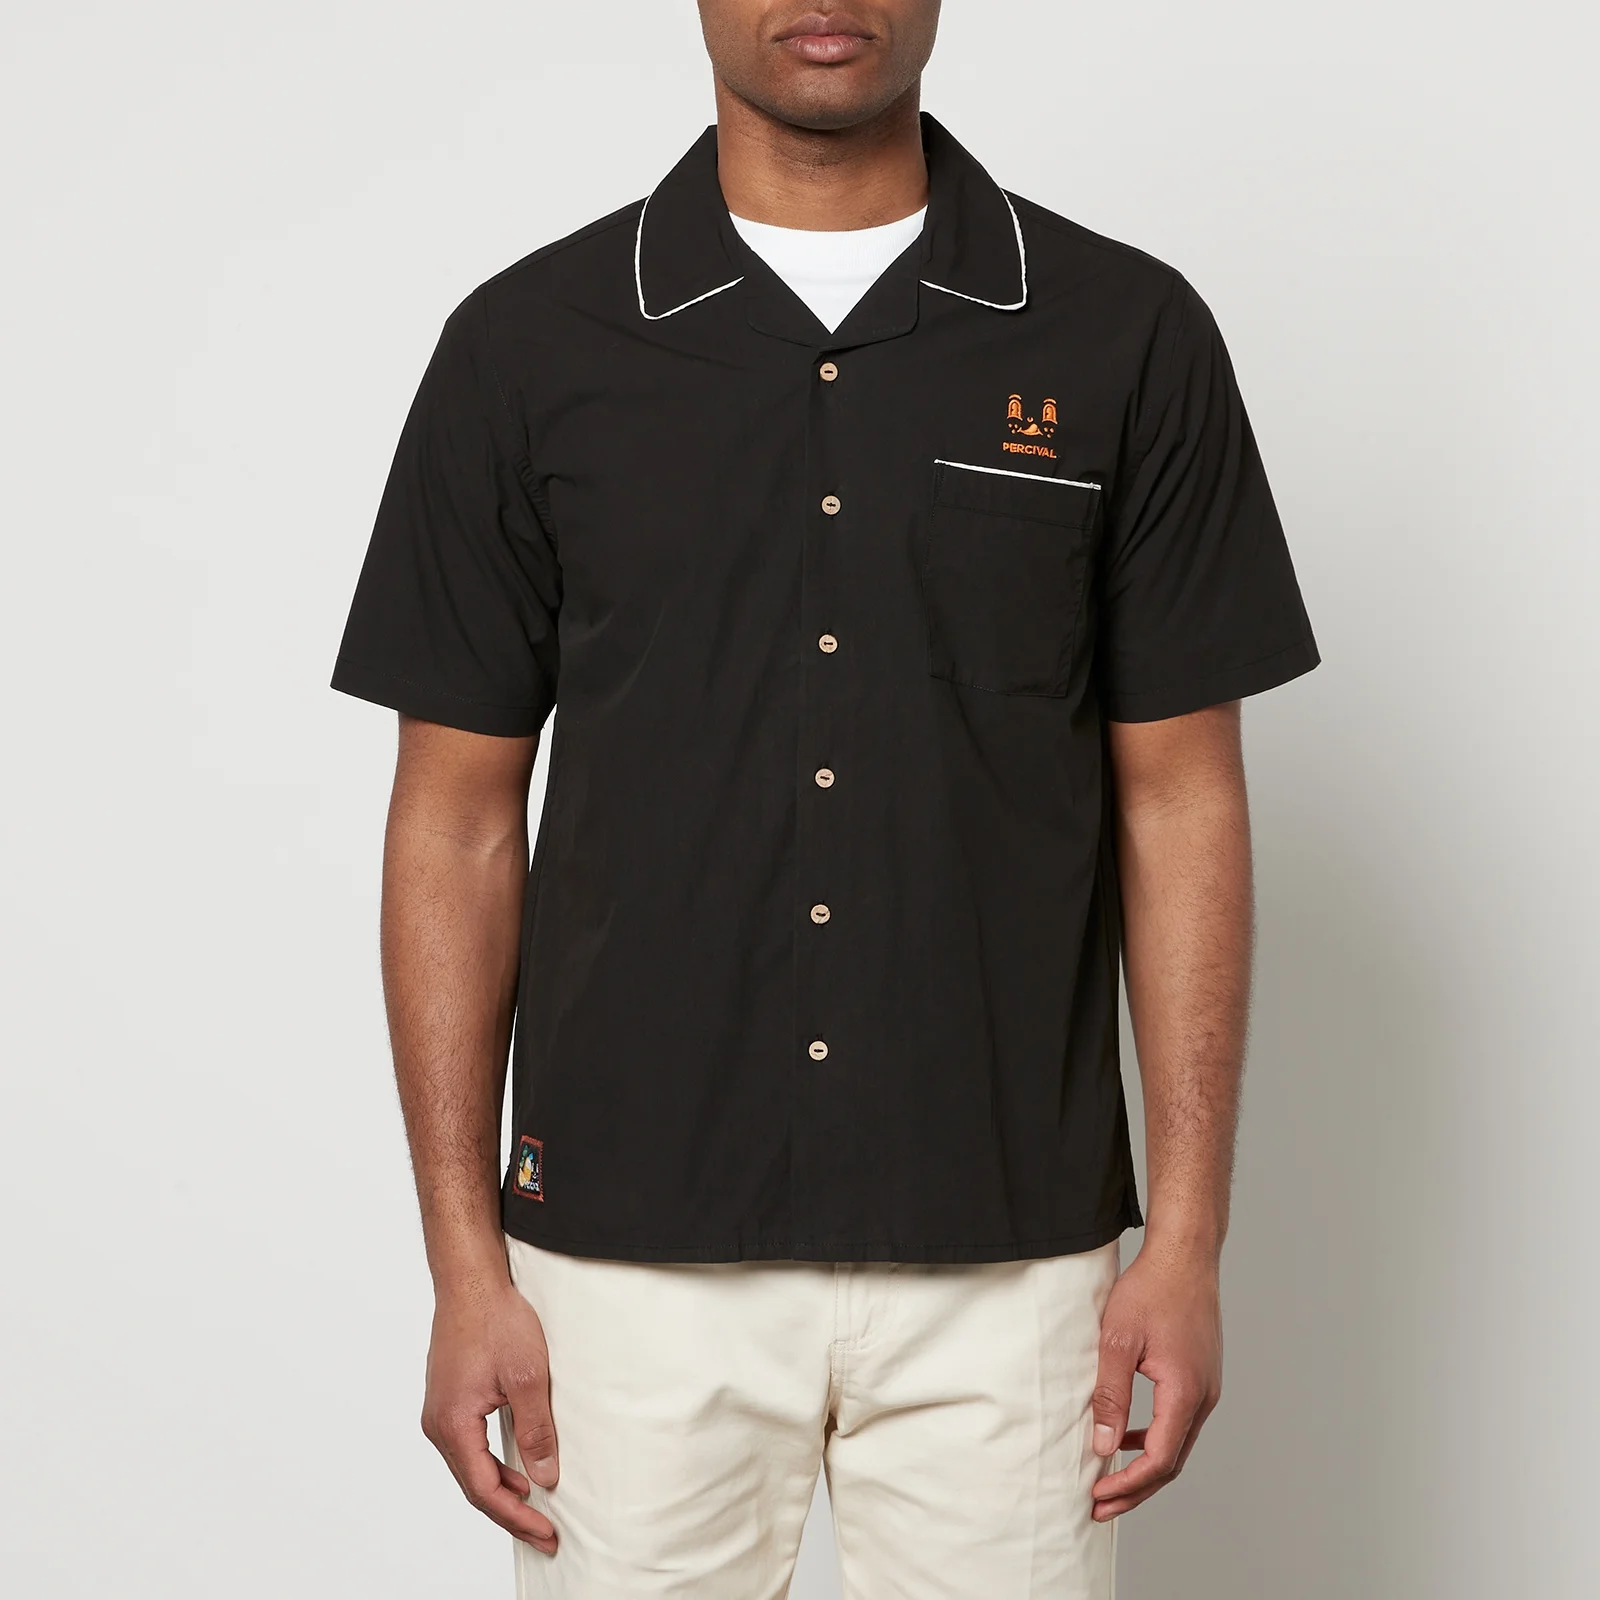 Percival PerciCo Cotton-Poplin Bowling Shirt Image 1